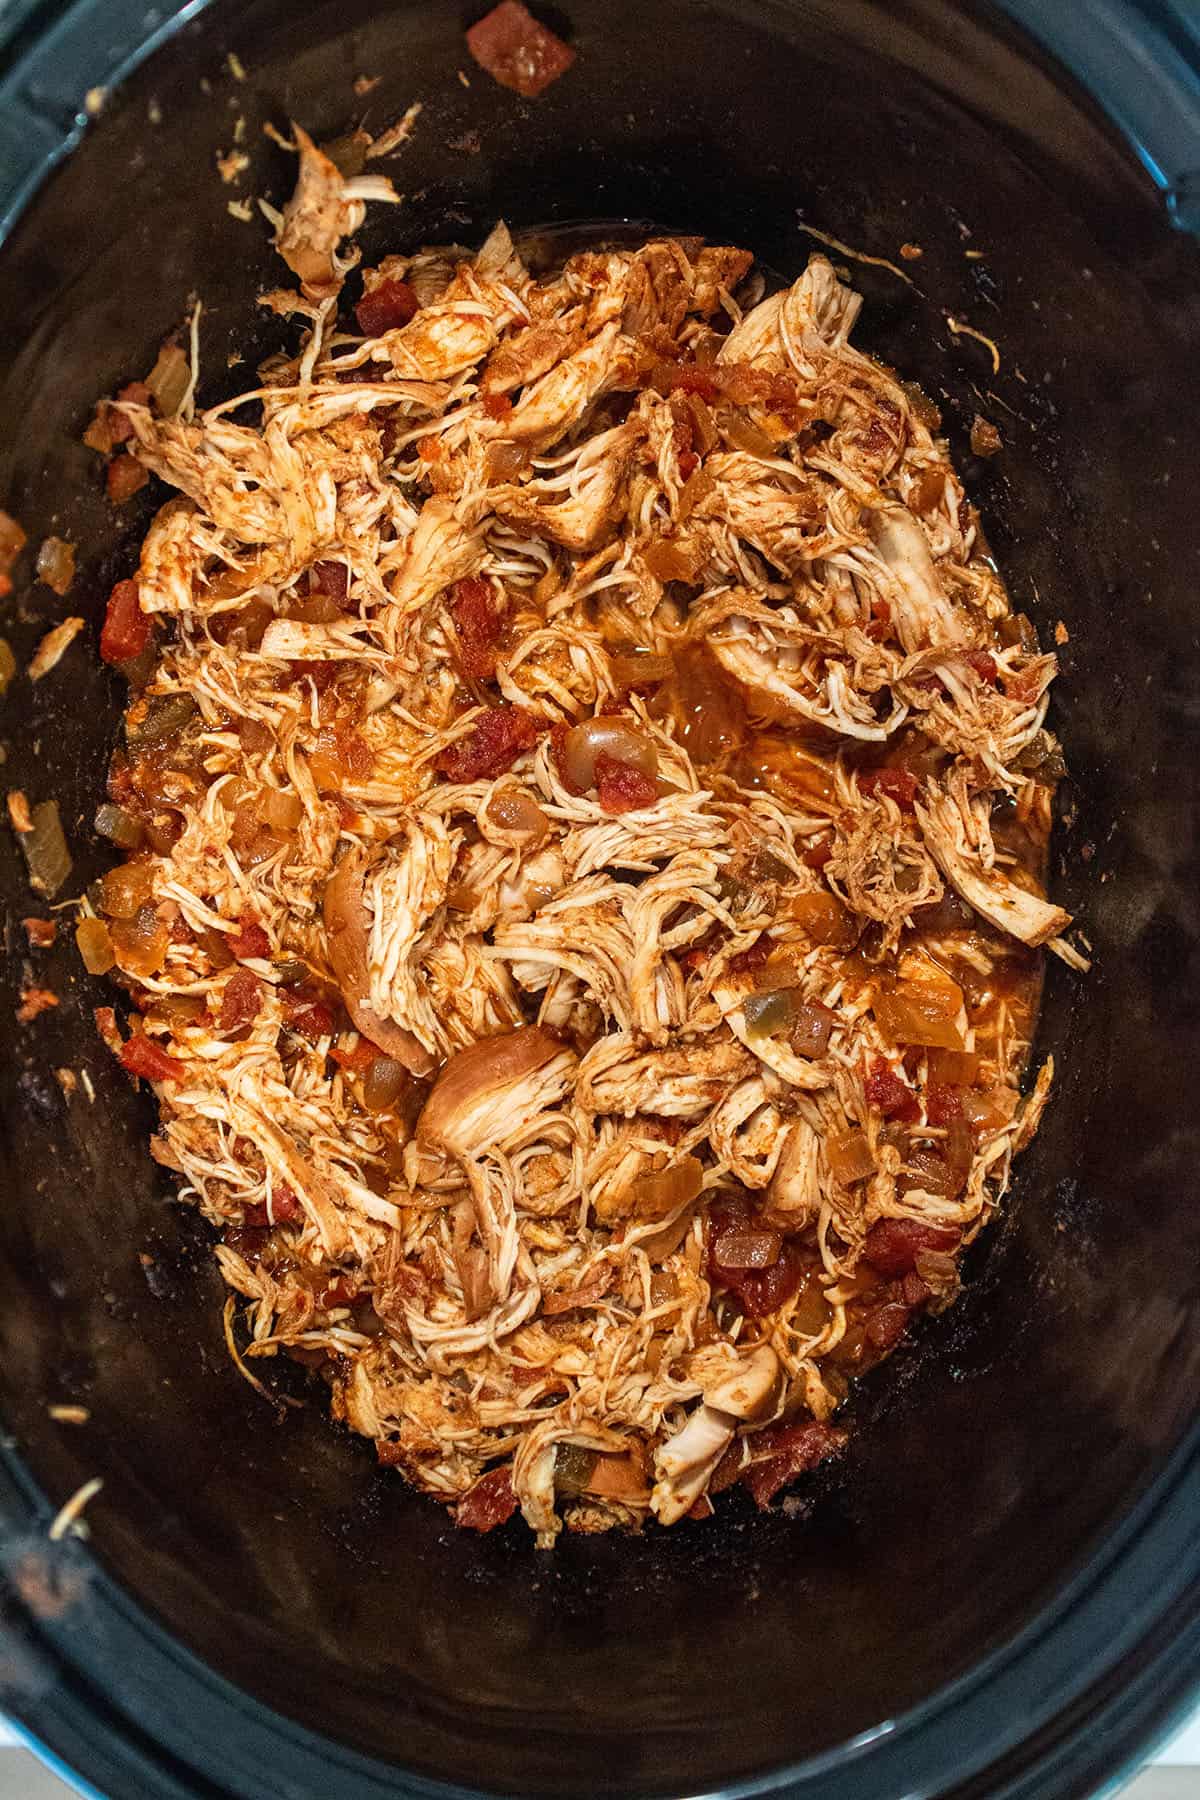 A crockpot full of shredded Mexican chicken.